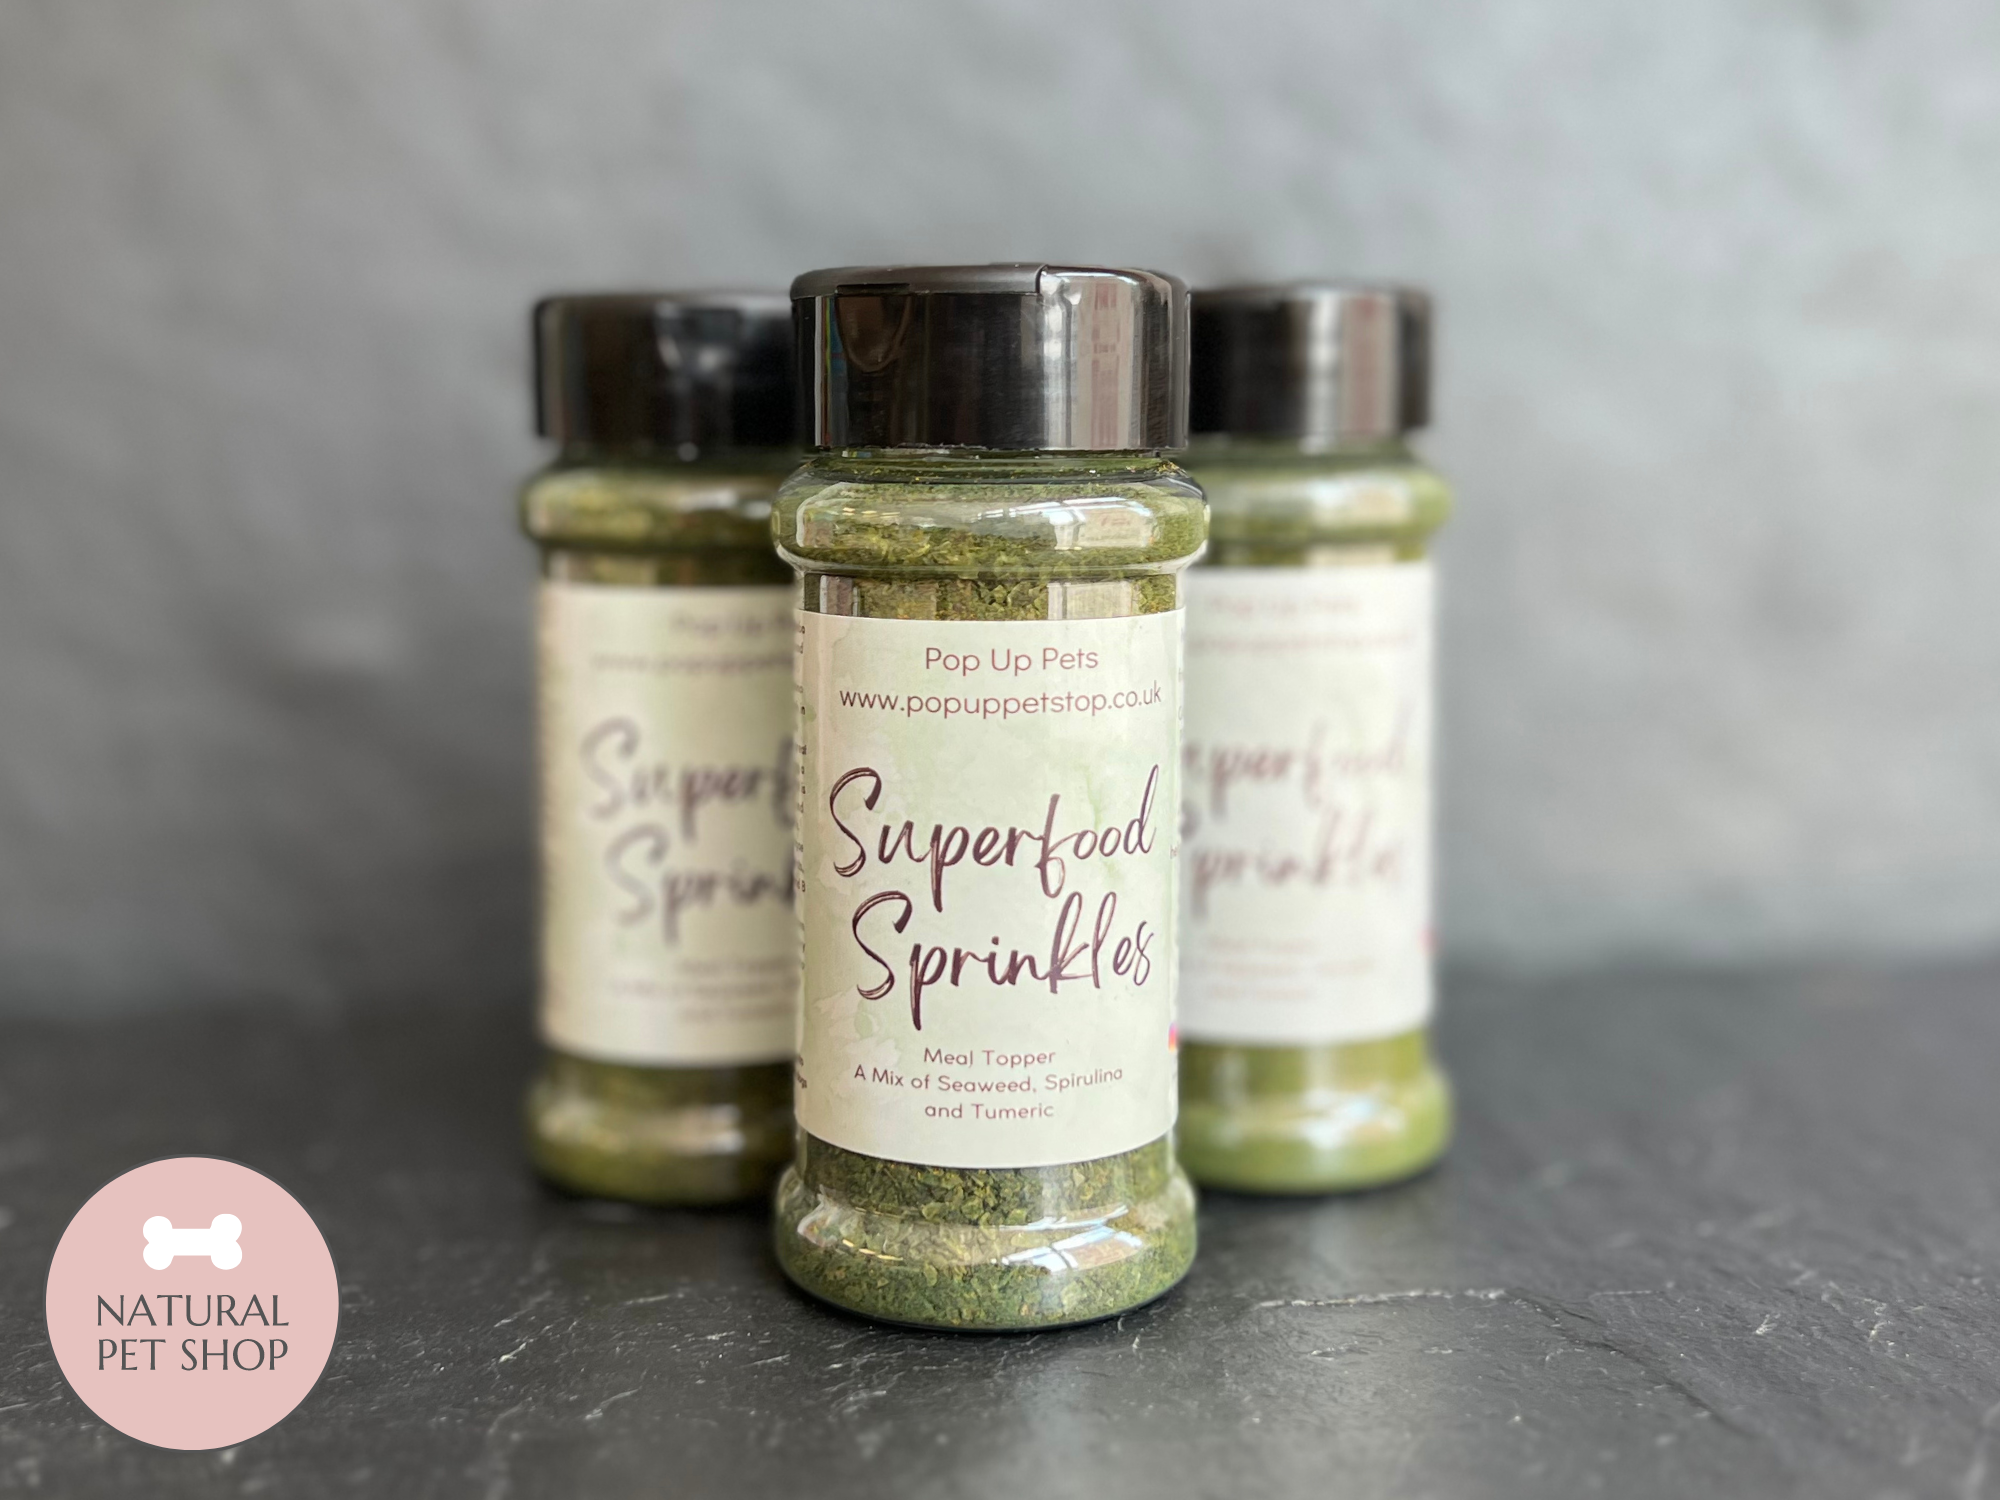 Superfood Sprinkles